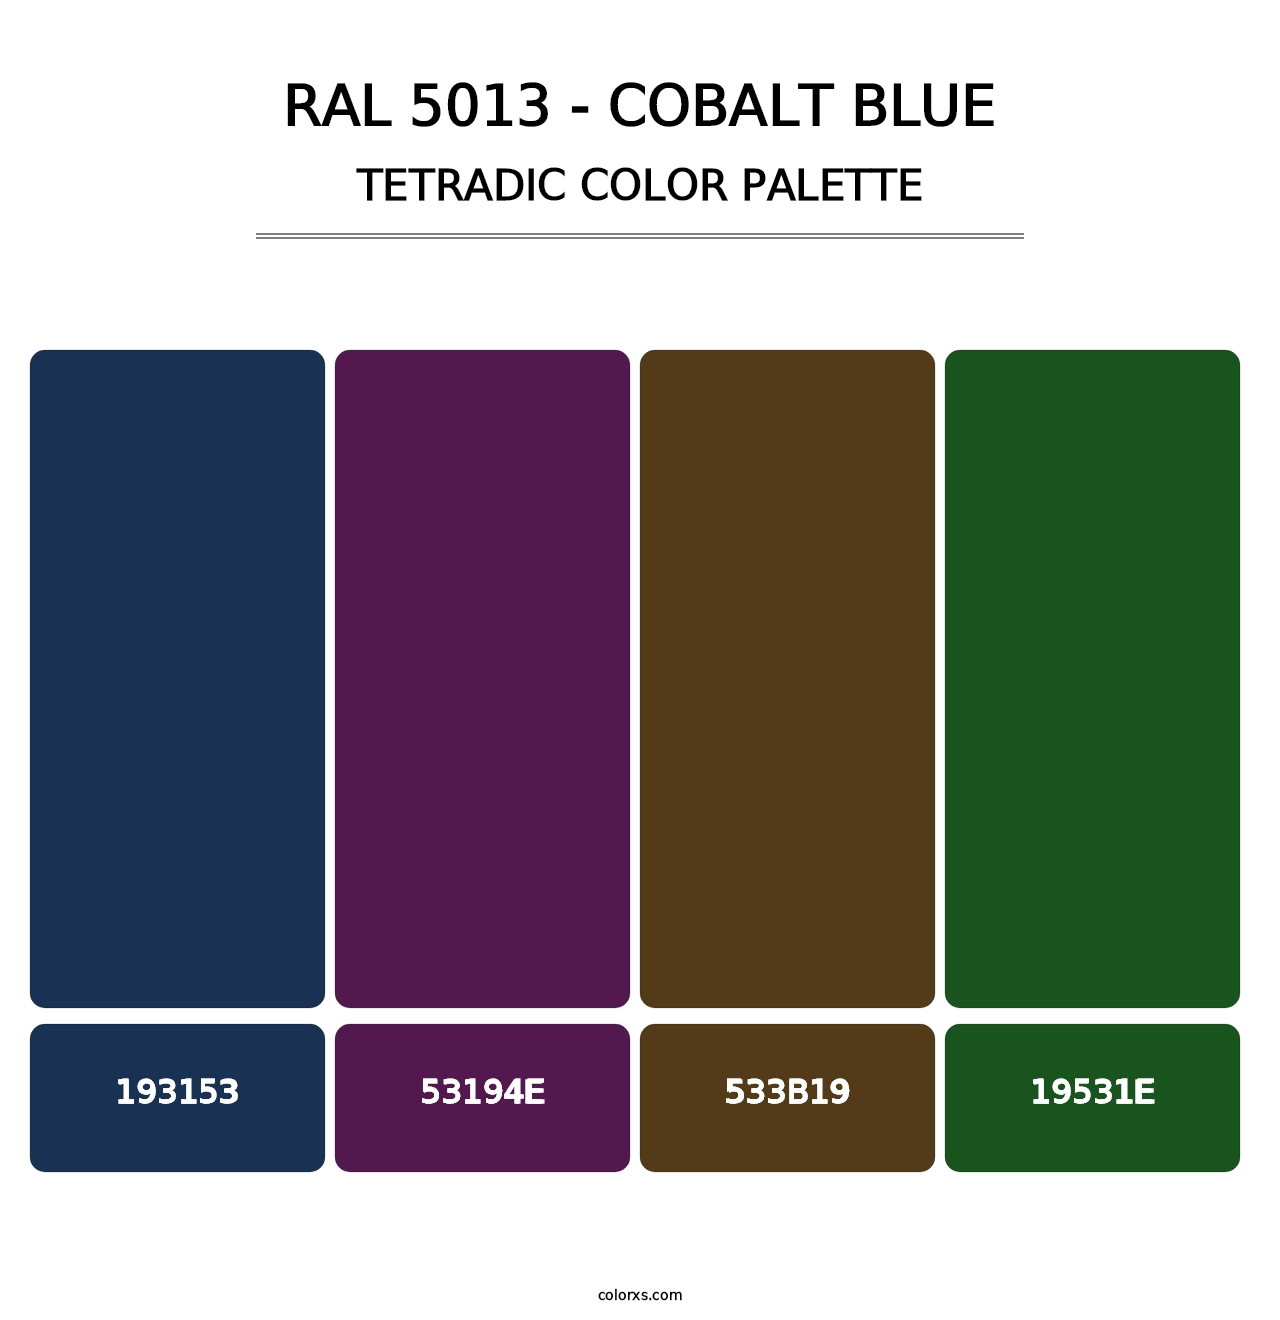 RAL 5013 - Cobalt Blue - Tetradic Color Palette